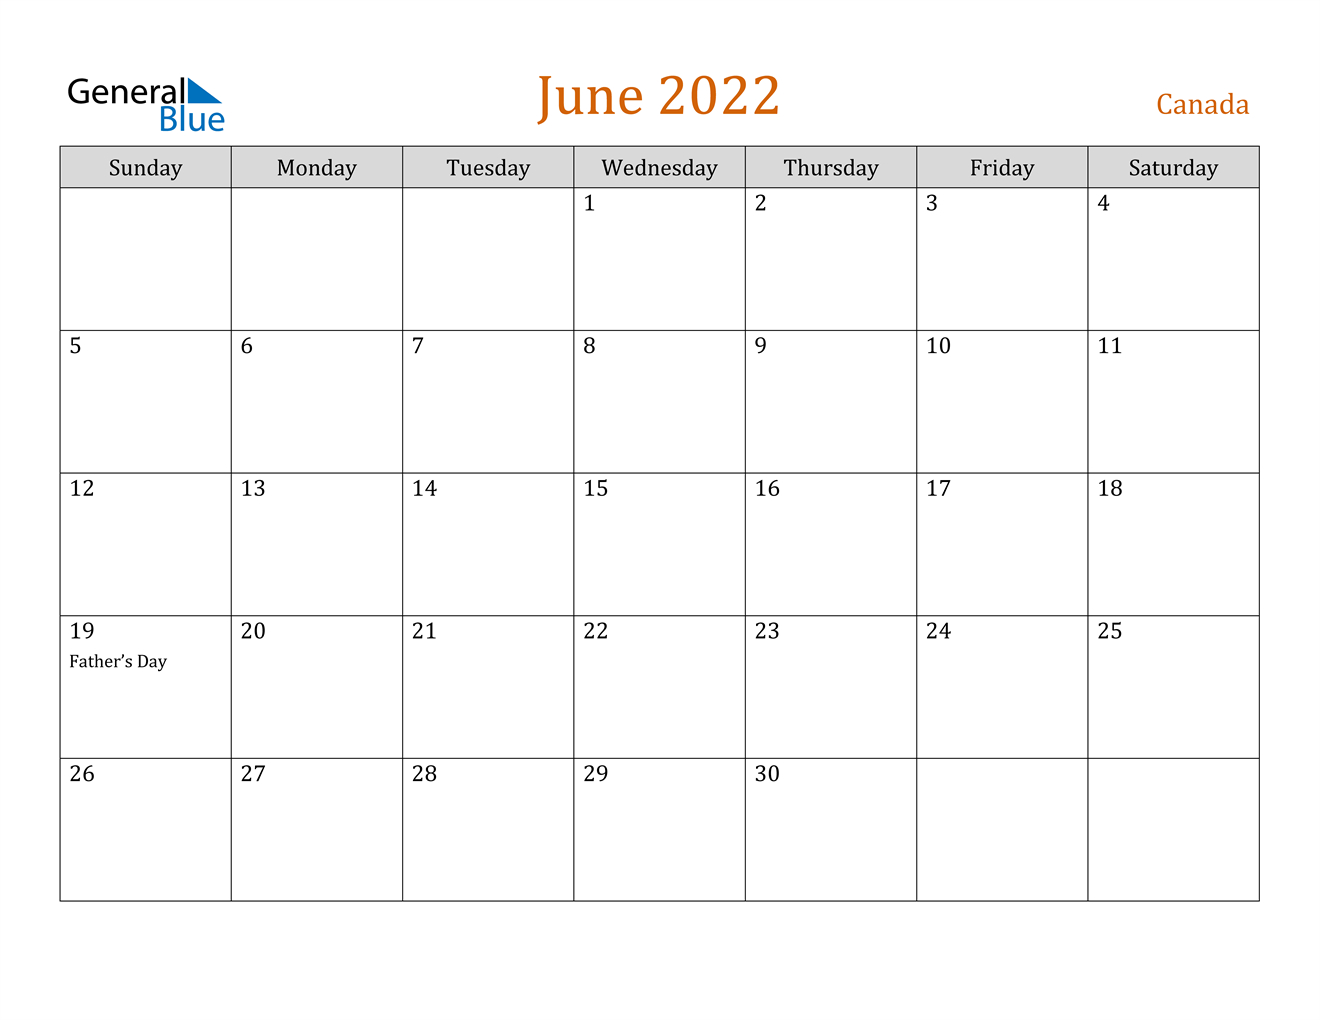 June 2022 Calendar - Canada